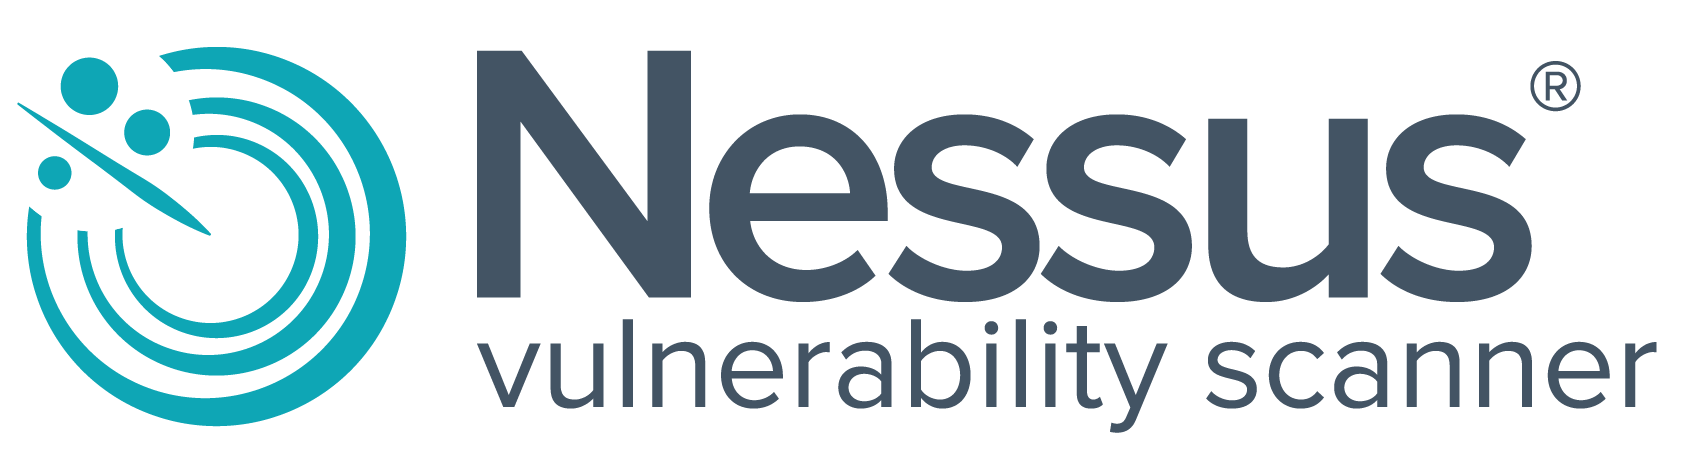 Nessus Vulnerability Scanner PRO